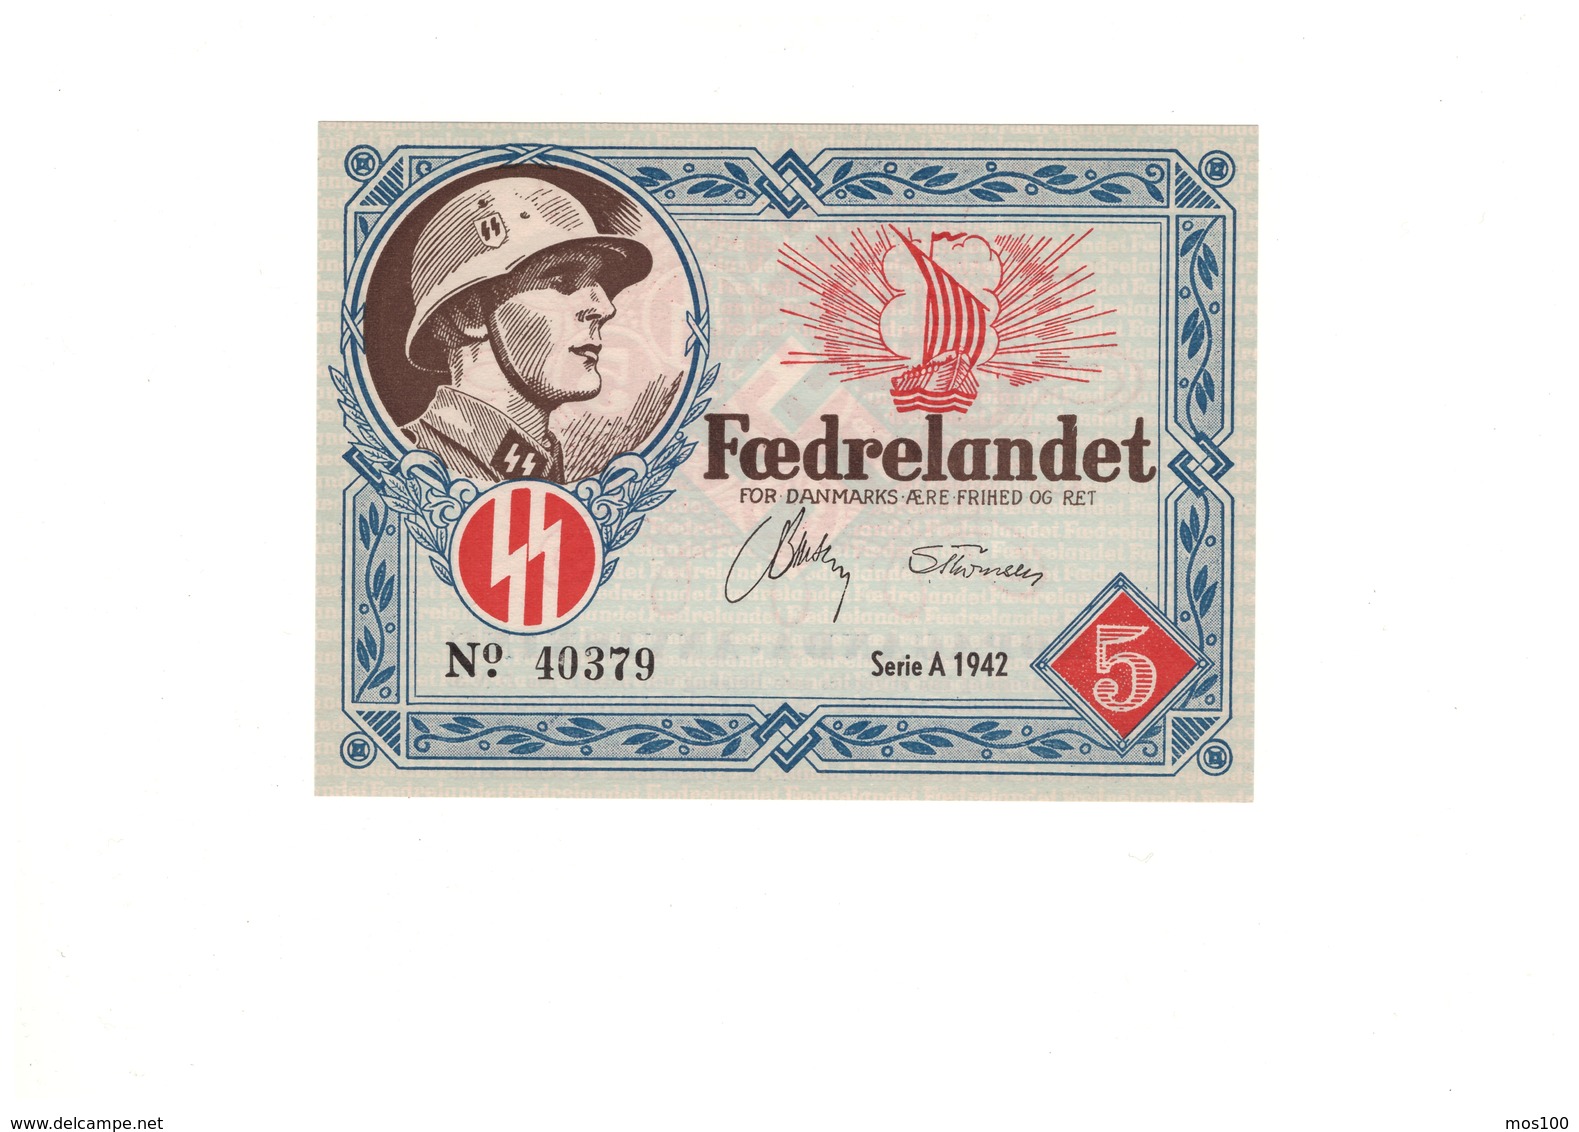 SS Freikorps Dänemark / SS Free Corps Denmark - Propagandageld / propaganda currency - UNC / kassenfrisch - DNSAP 1942